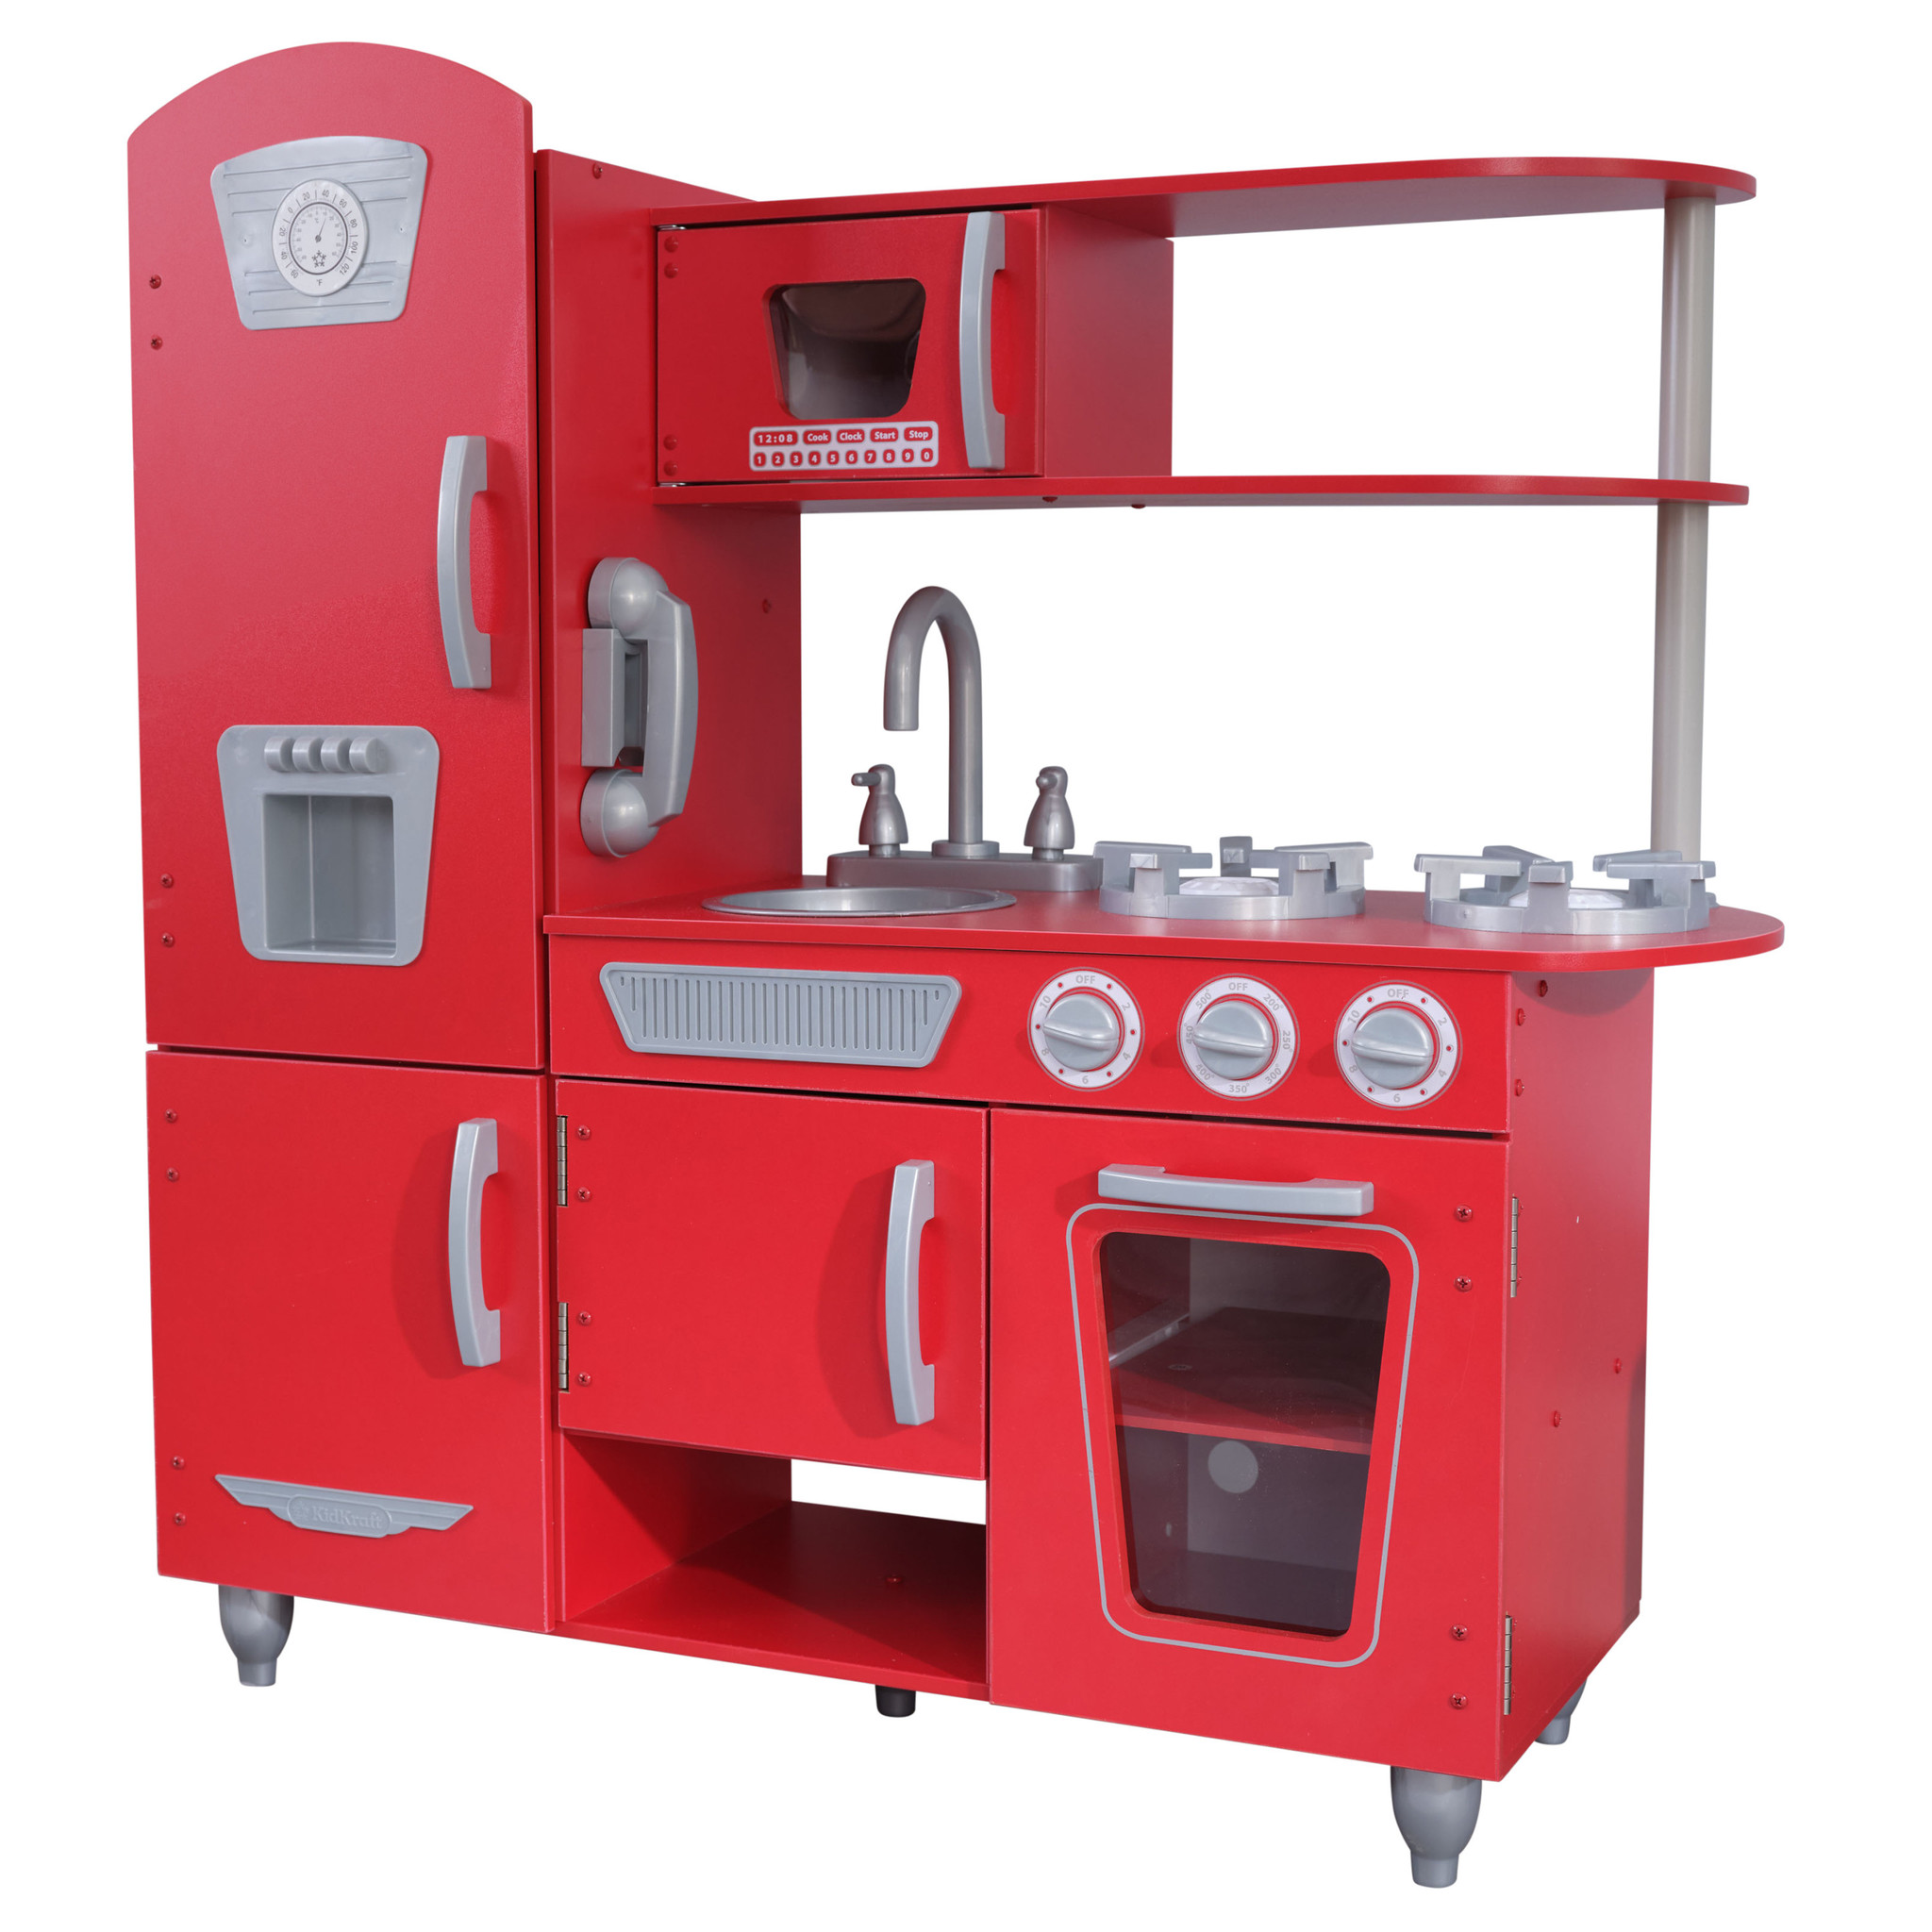 https://cdn.webshopapp.com/shops/9071/files/416880841/play-kitchen-red-red-toy-kitchen-for-children.jpg